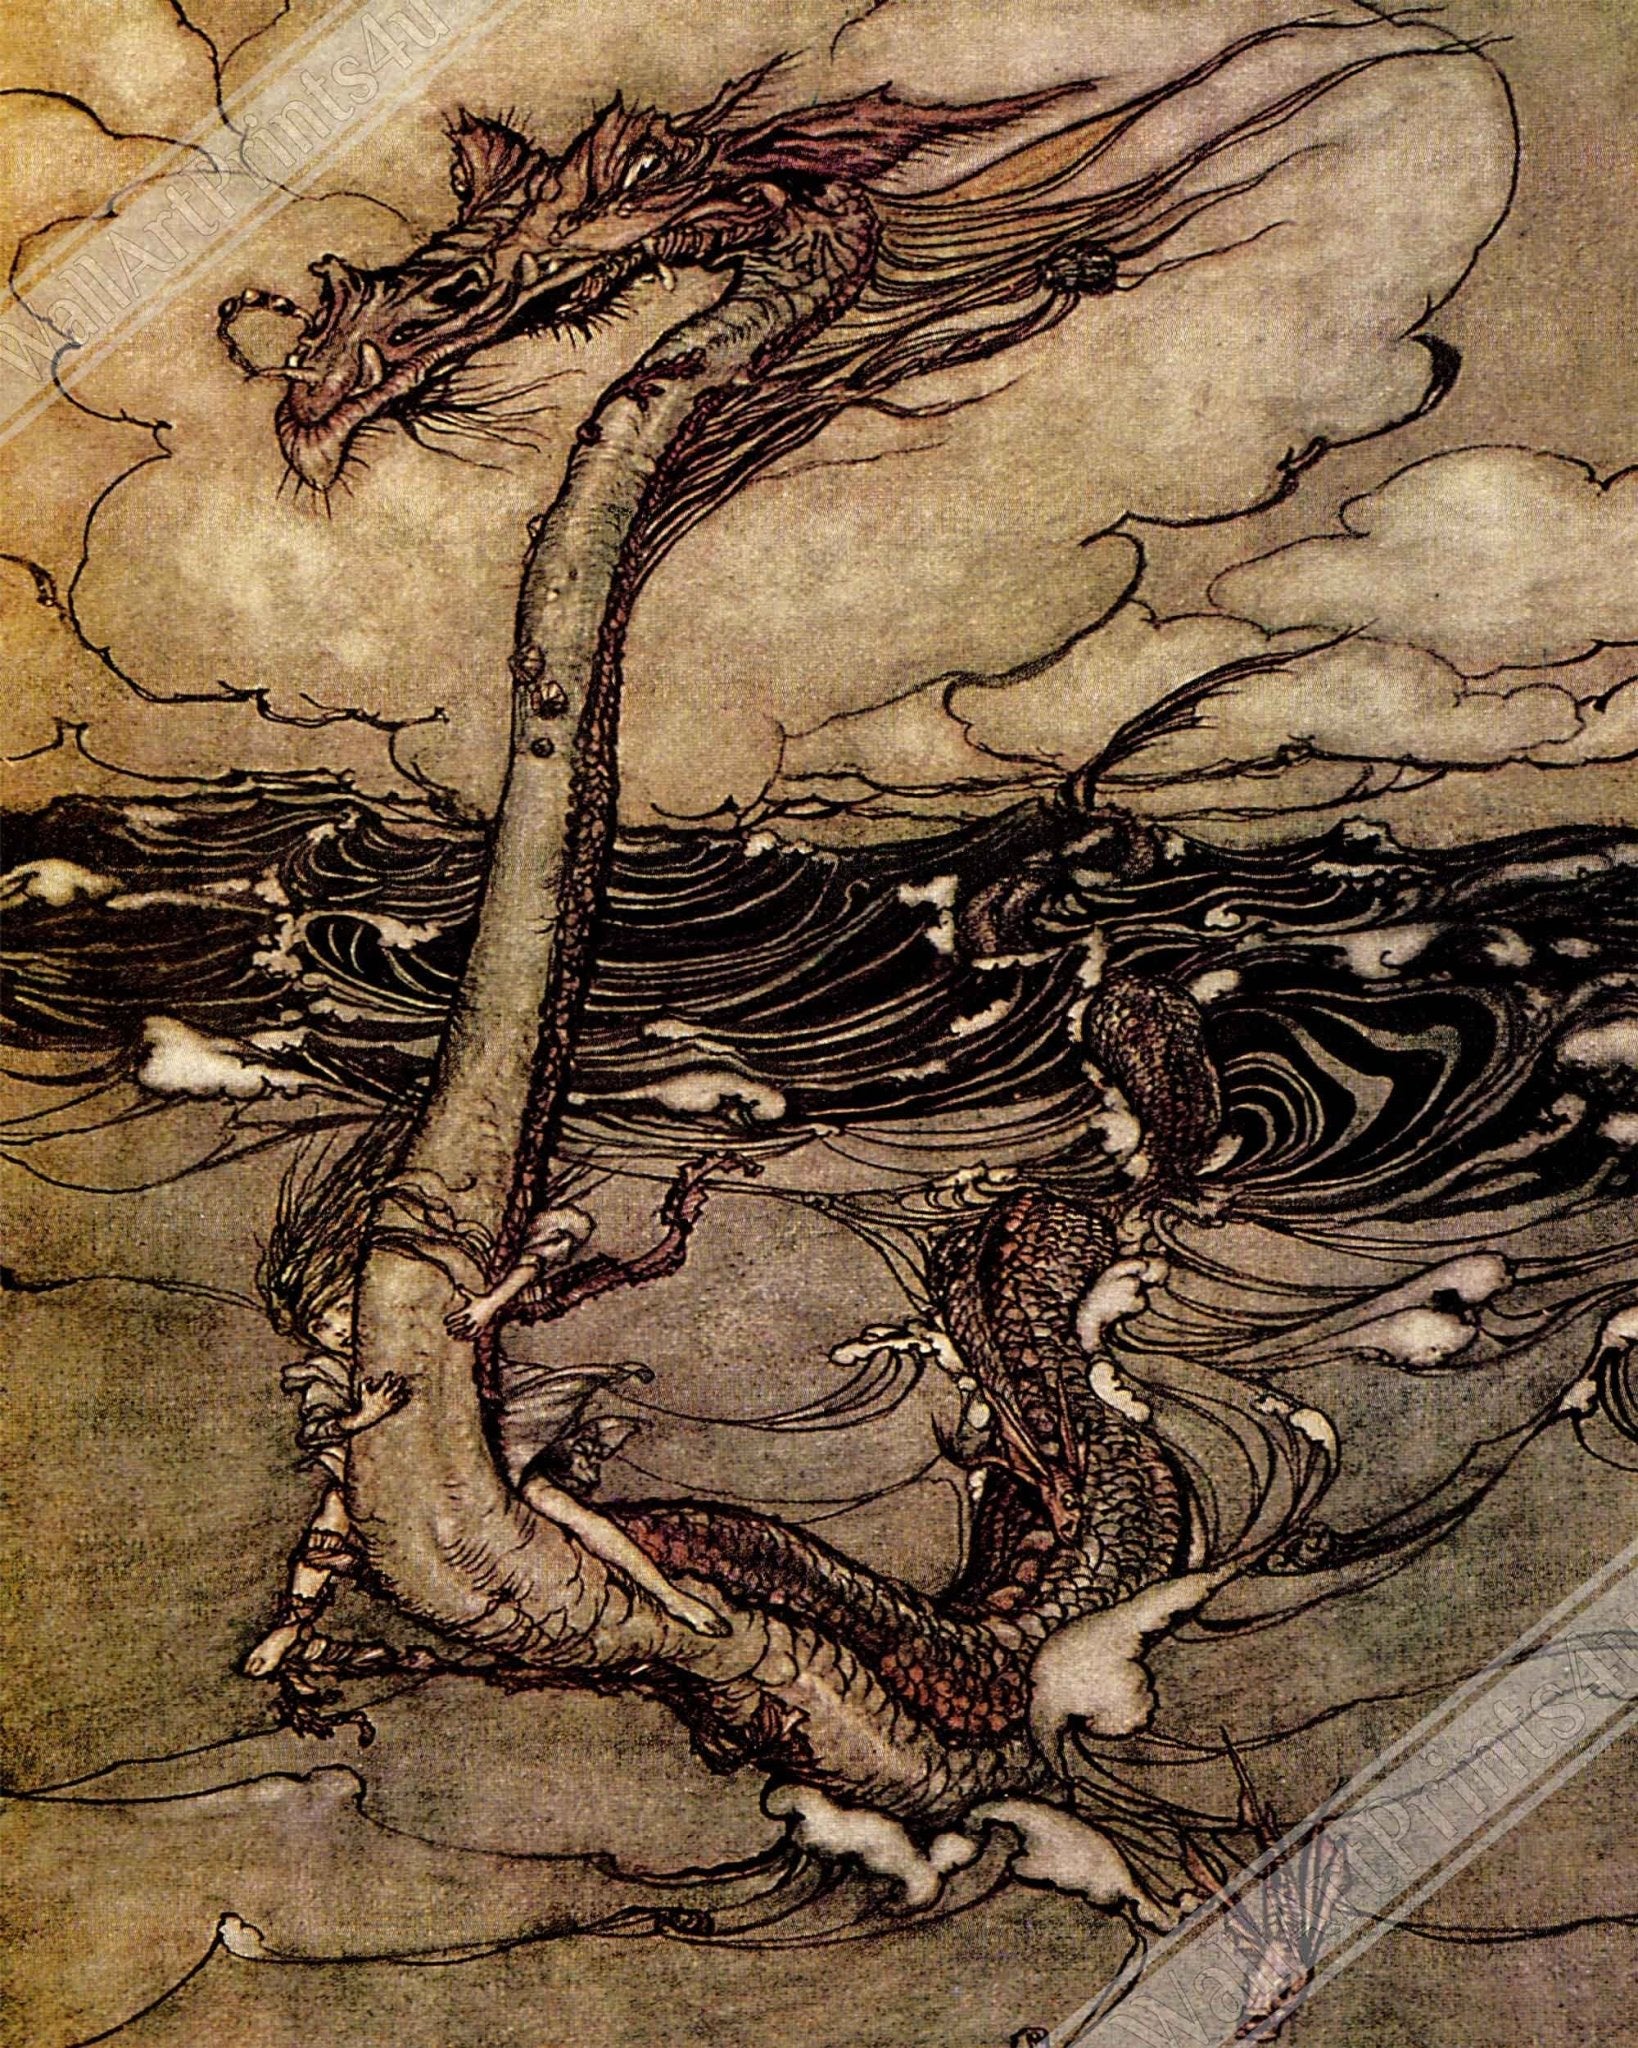 Vintage Sea Monster Poster - Arthur Rackham Sea Serpent - Arthur Rackham Print - WallArtPrints4U